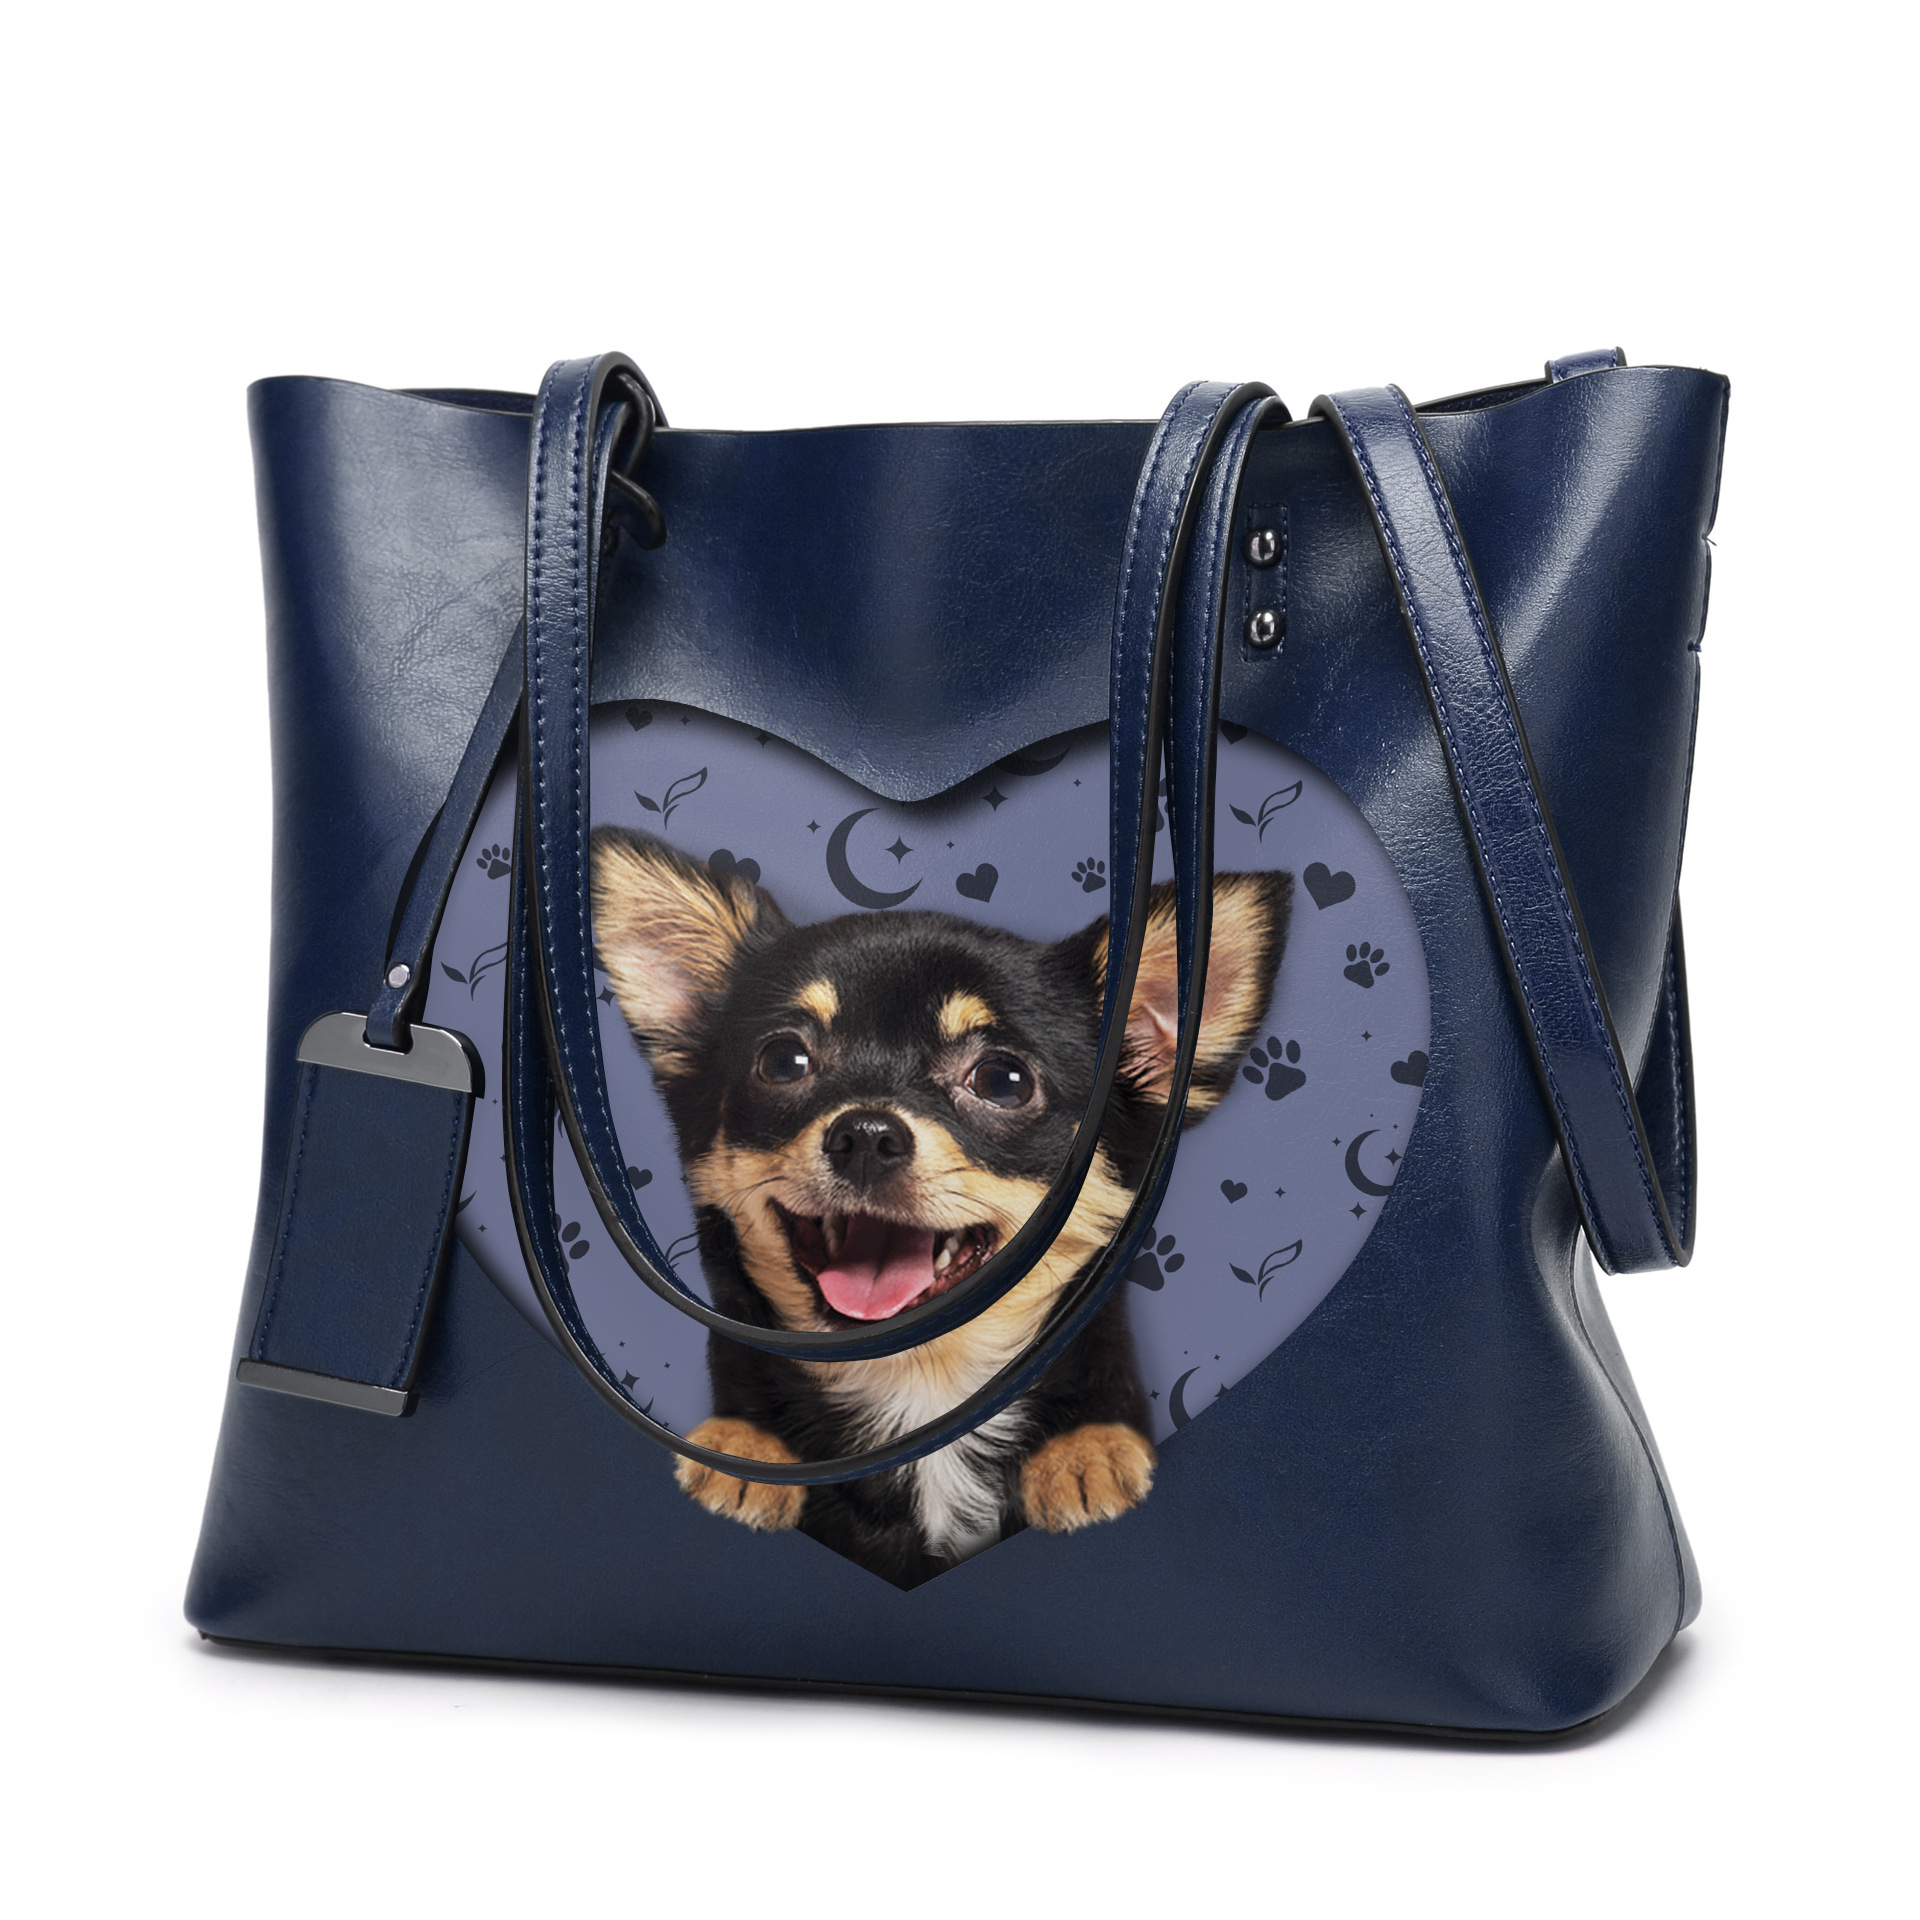 I Know I'm Cute - Chihuahua Glamour Handbag V3 - 12